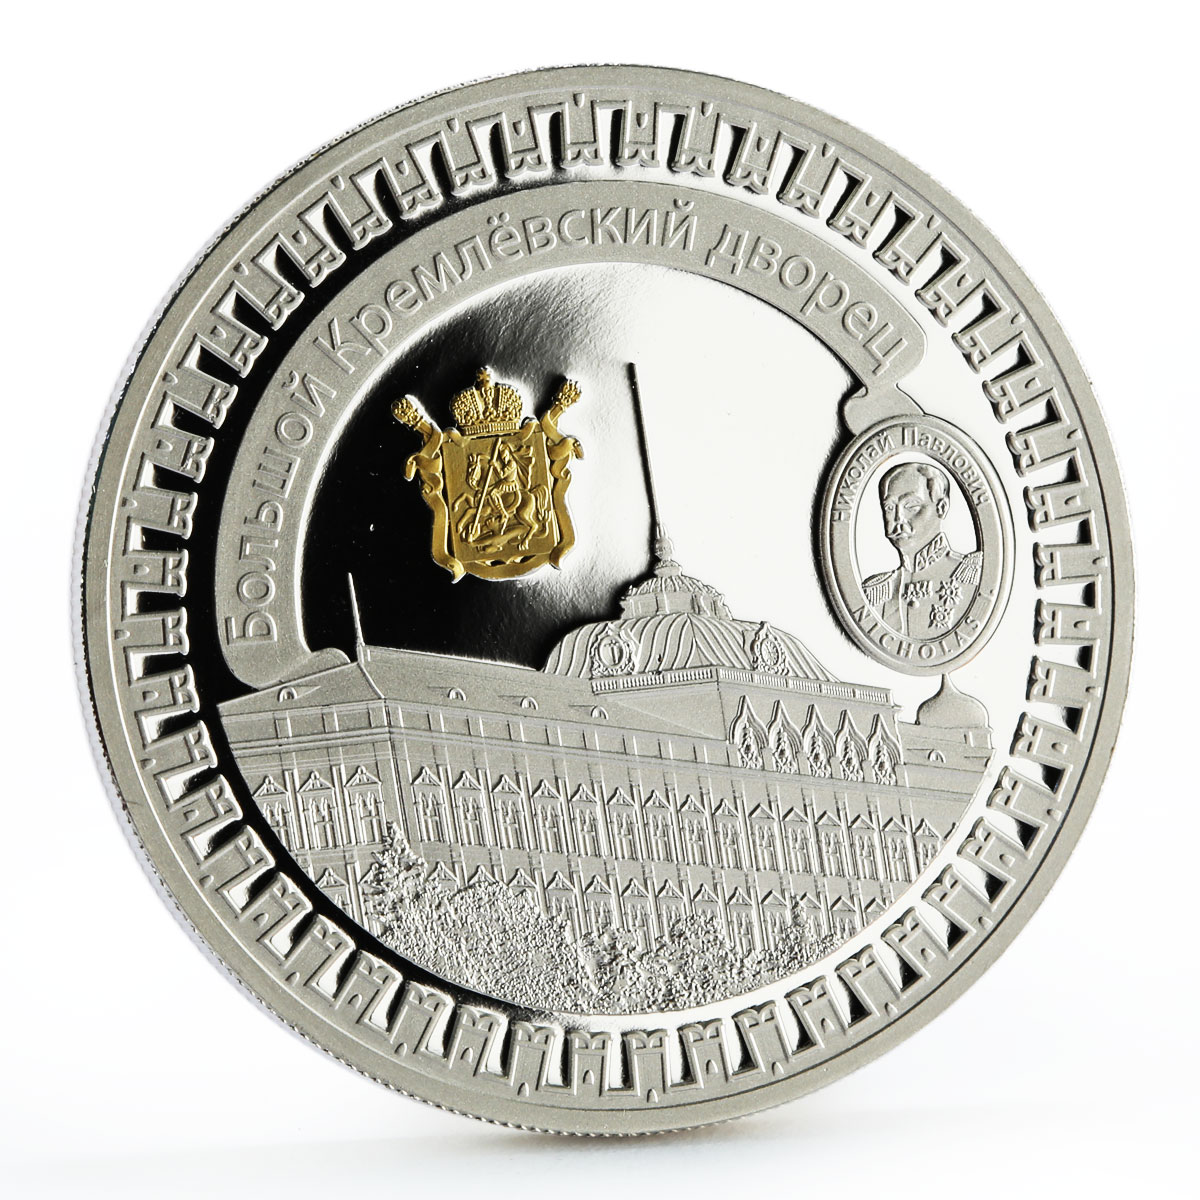 Liberia 5 dollars The Kremlin series Grand Kremlin Palace silver coin 2011